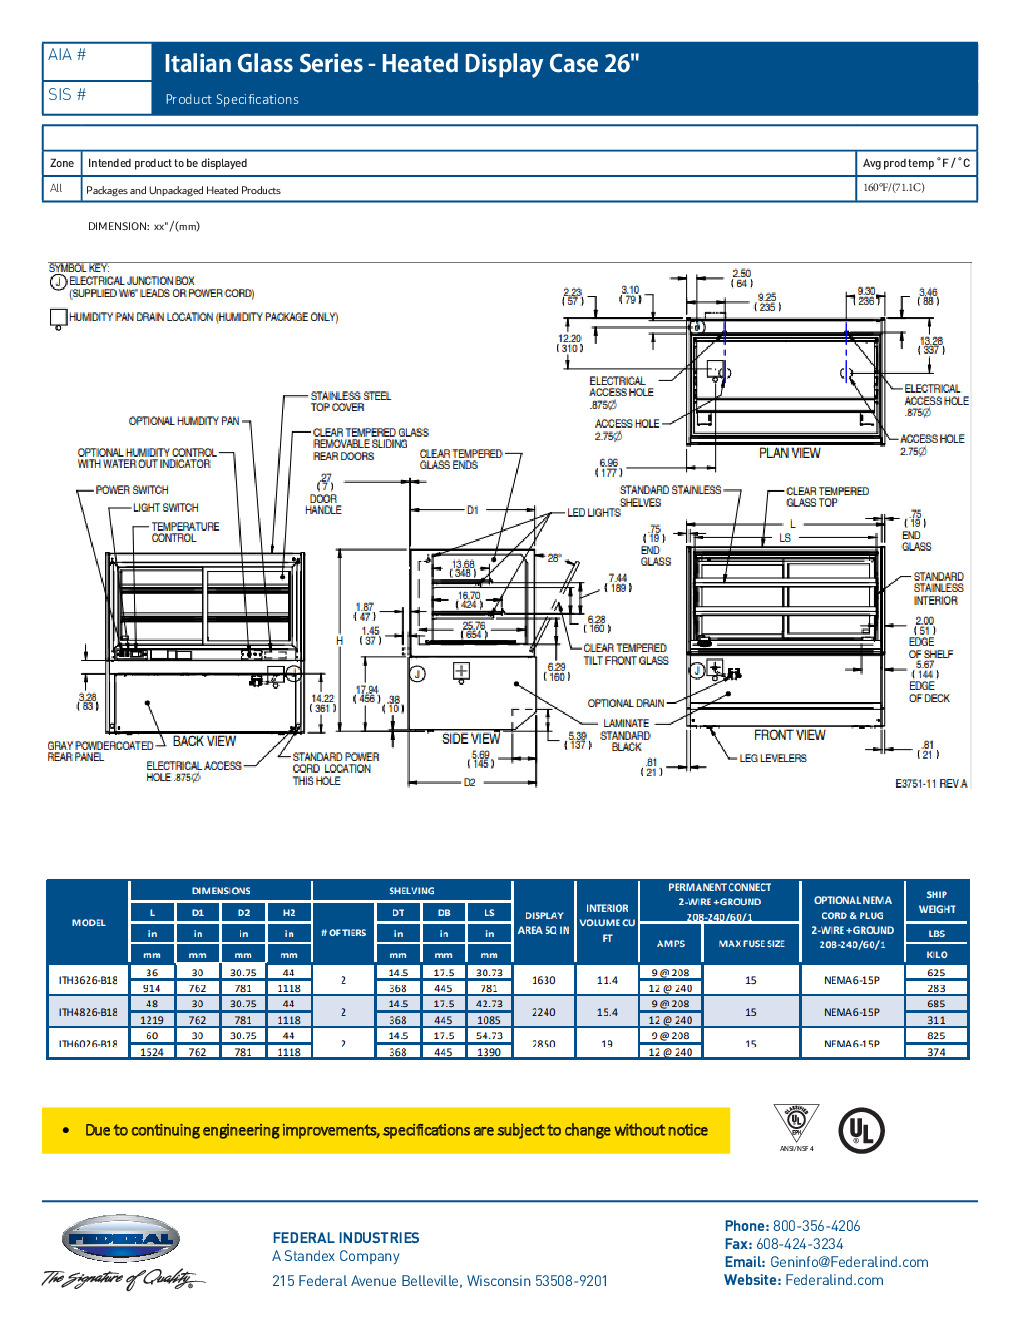 Federal Industries ITH6026-B18 Floor Model Heated Display Case